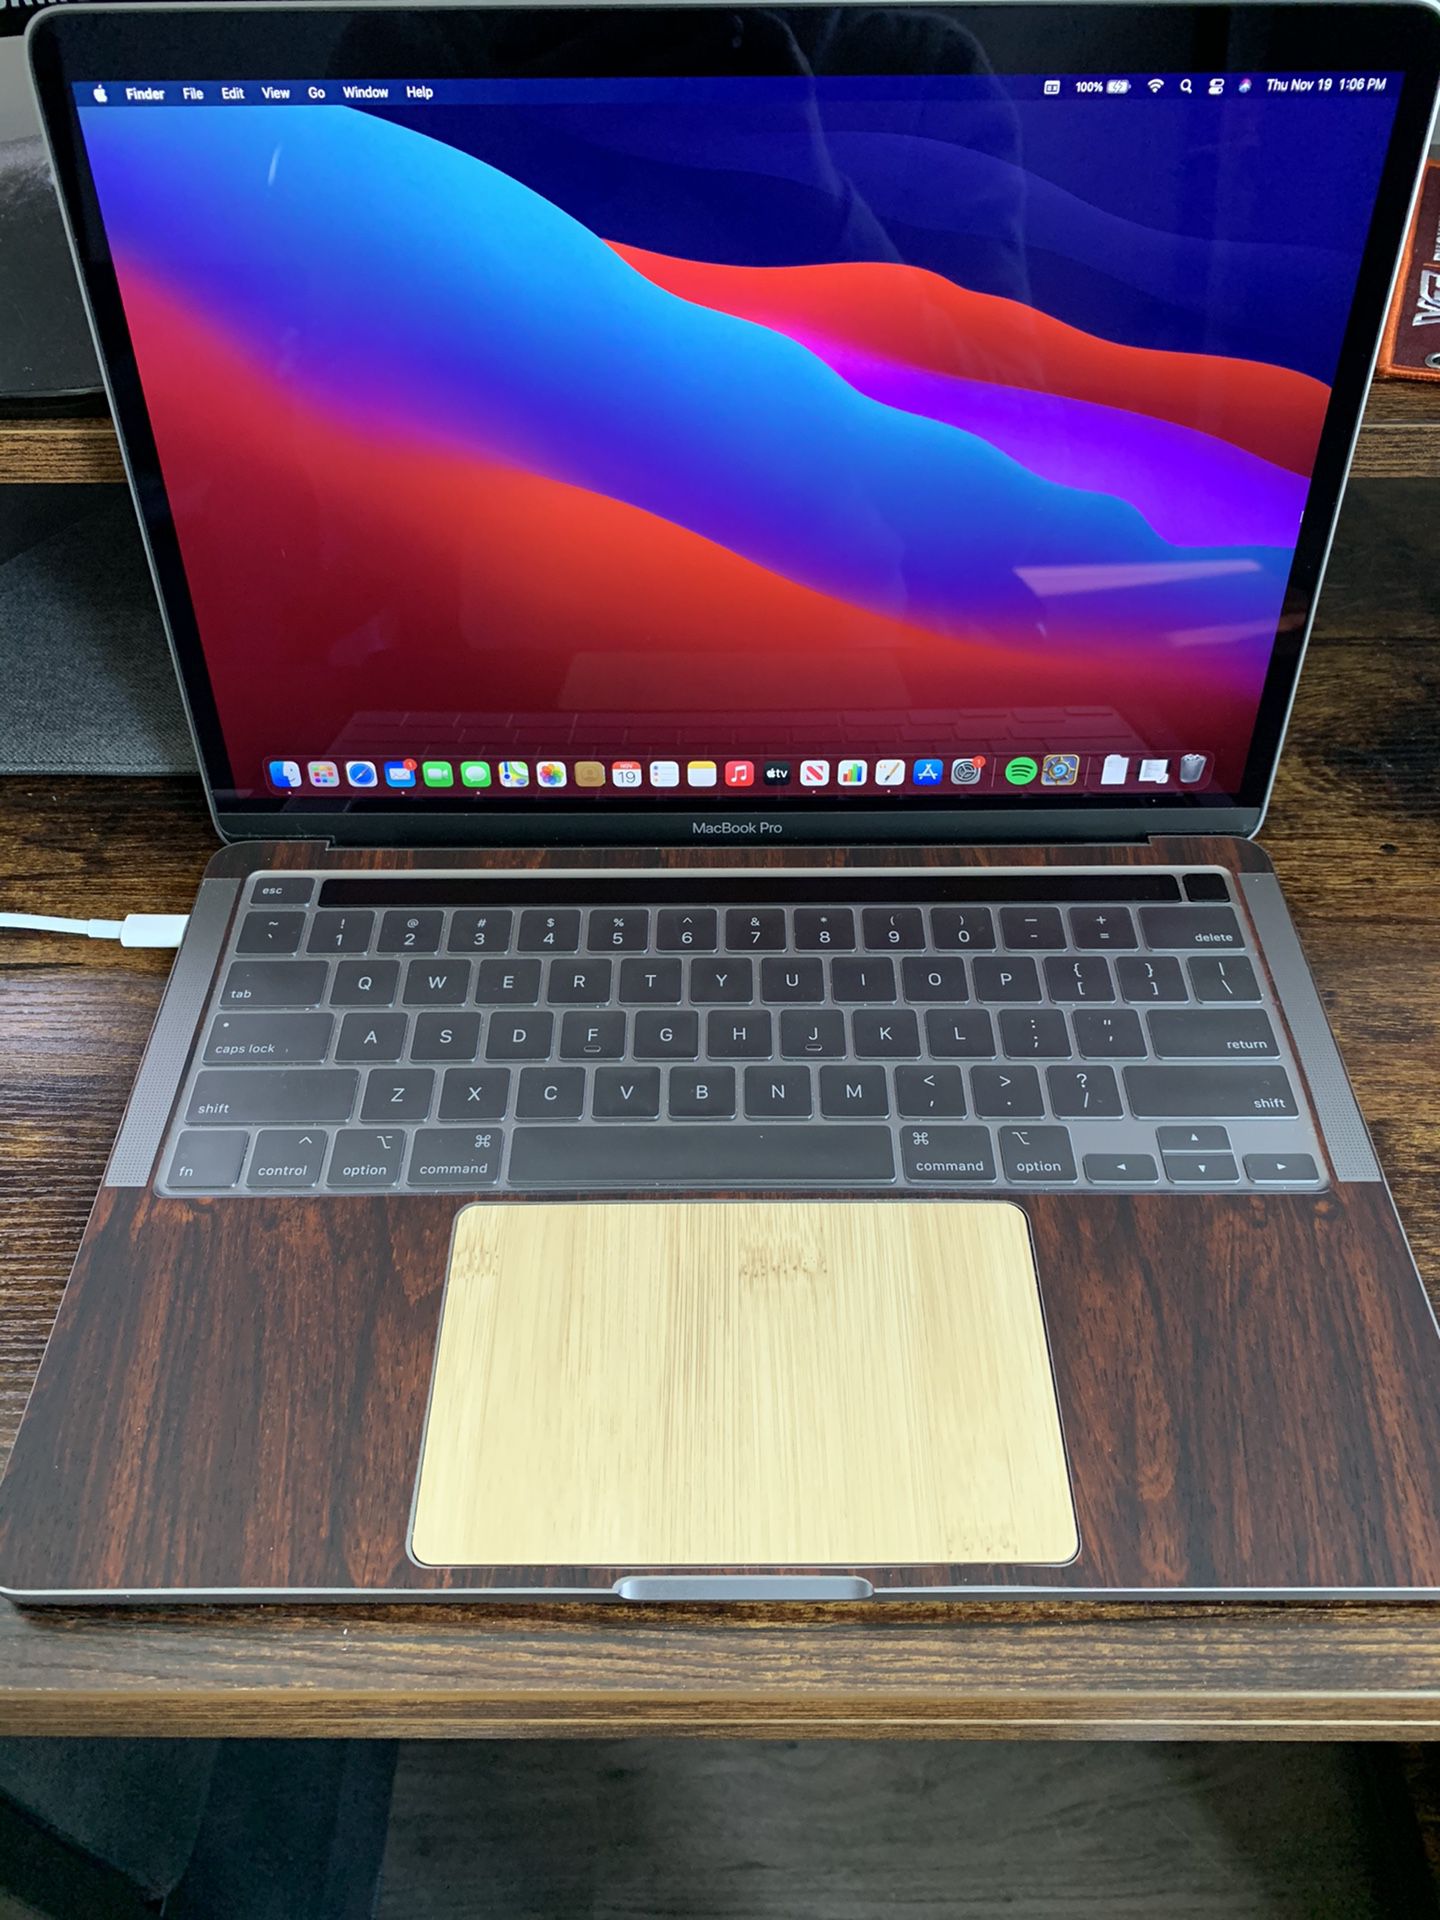 Apple MacBook Pro (13-inch 2020) 2.0 GHz Intel core i5 512GB SSD 16GB RAM